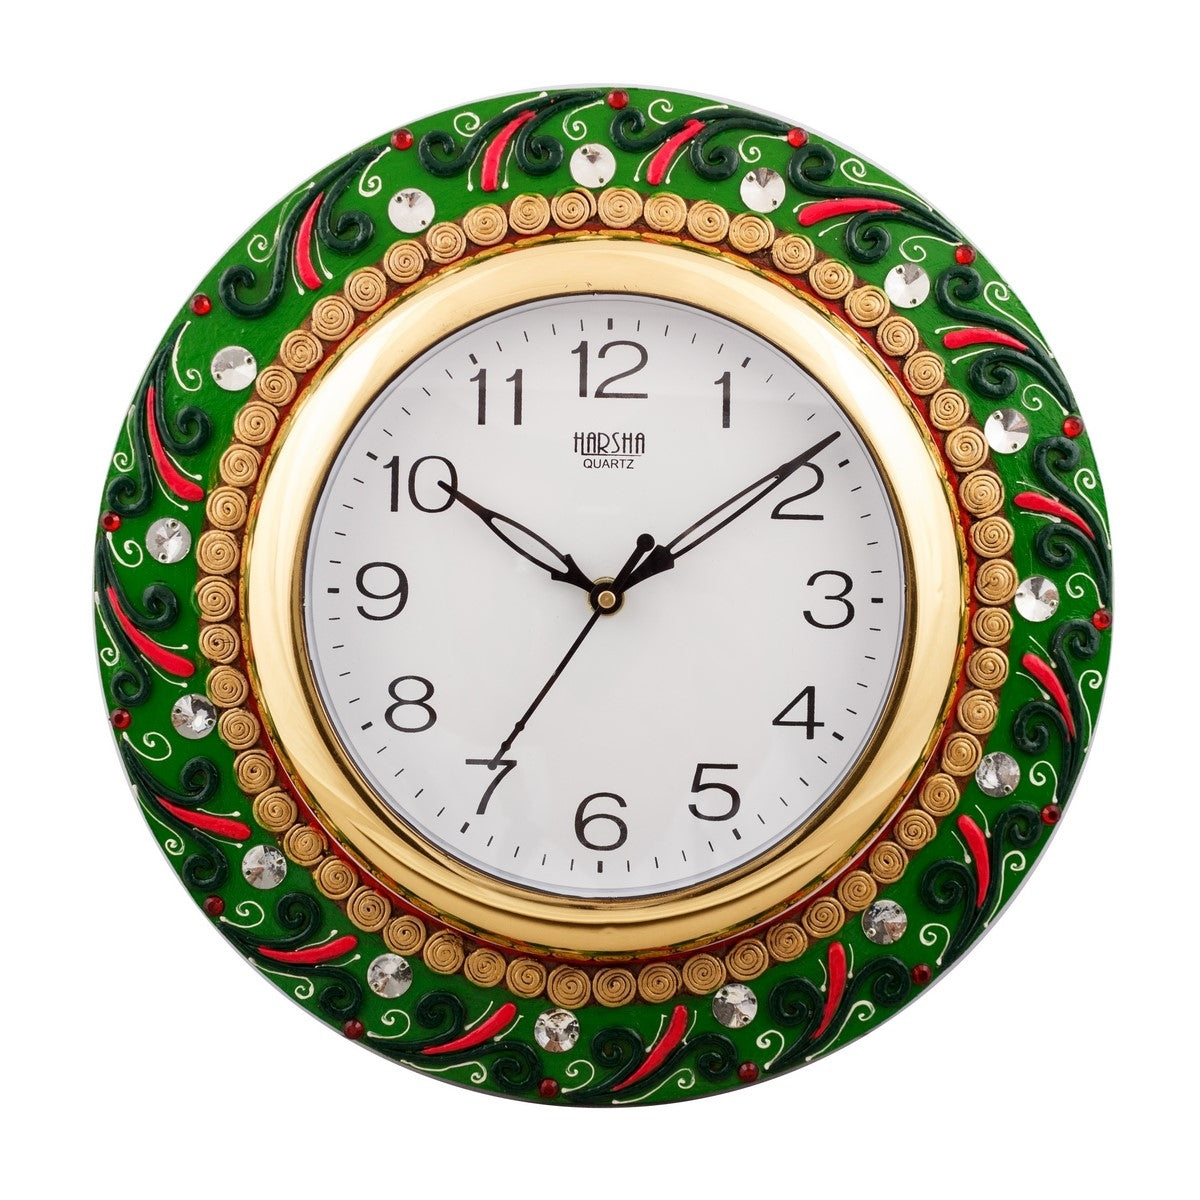 Splendid Green Color Embossed Papier-Mache Wooden Handcrafted Wall Clock